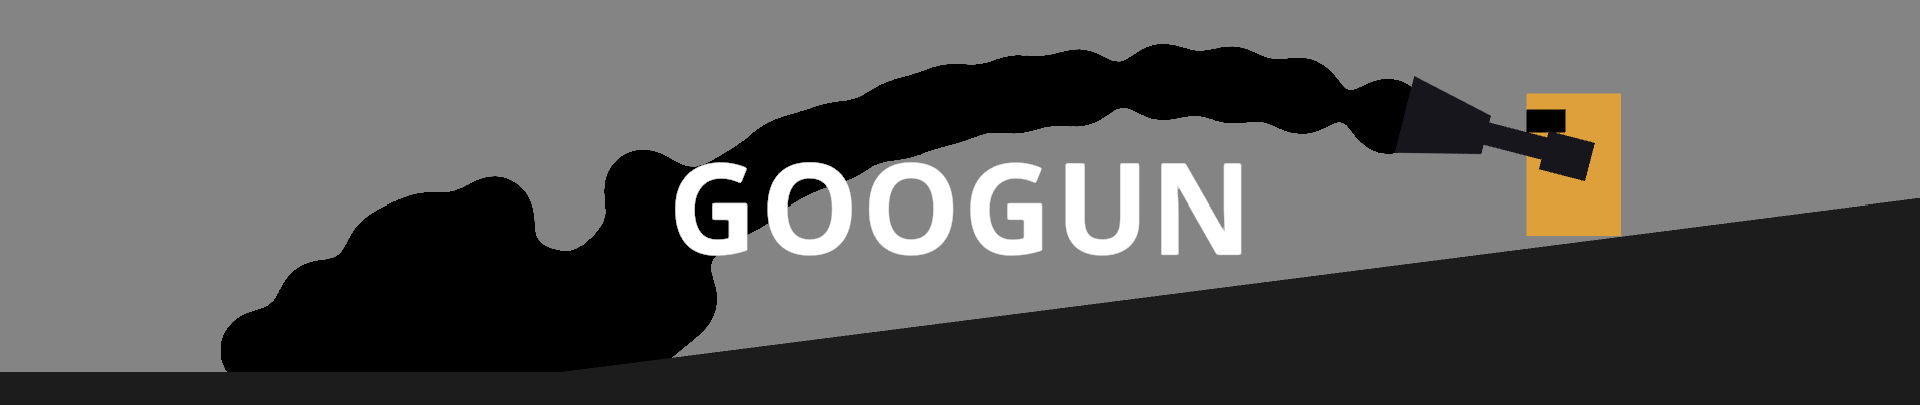 Googun